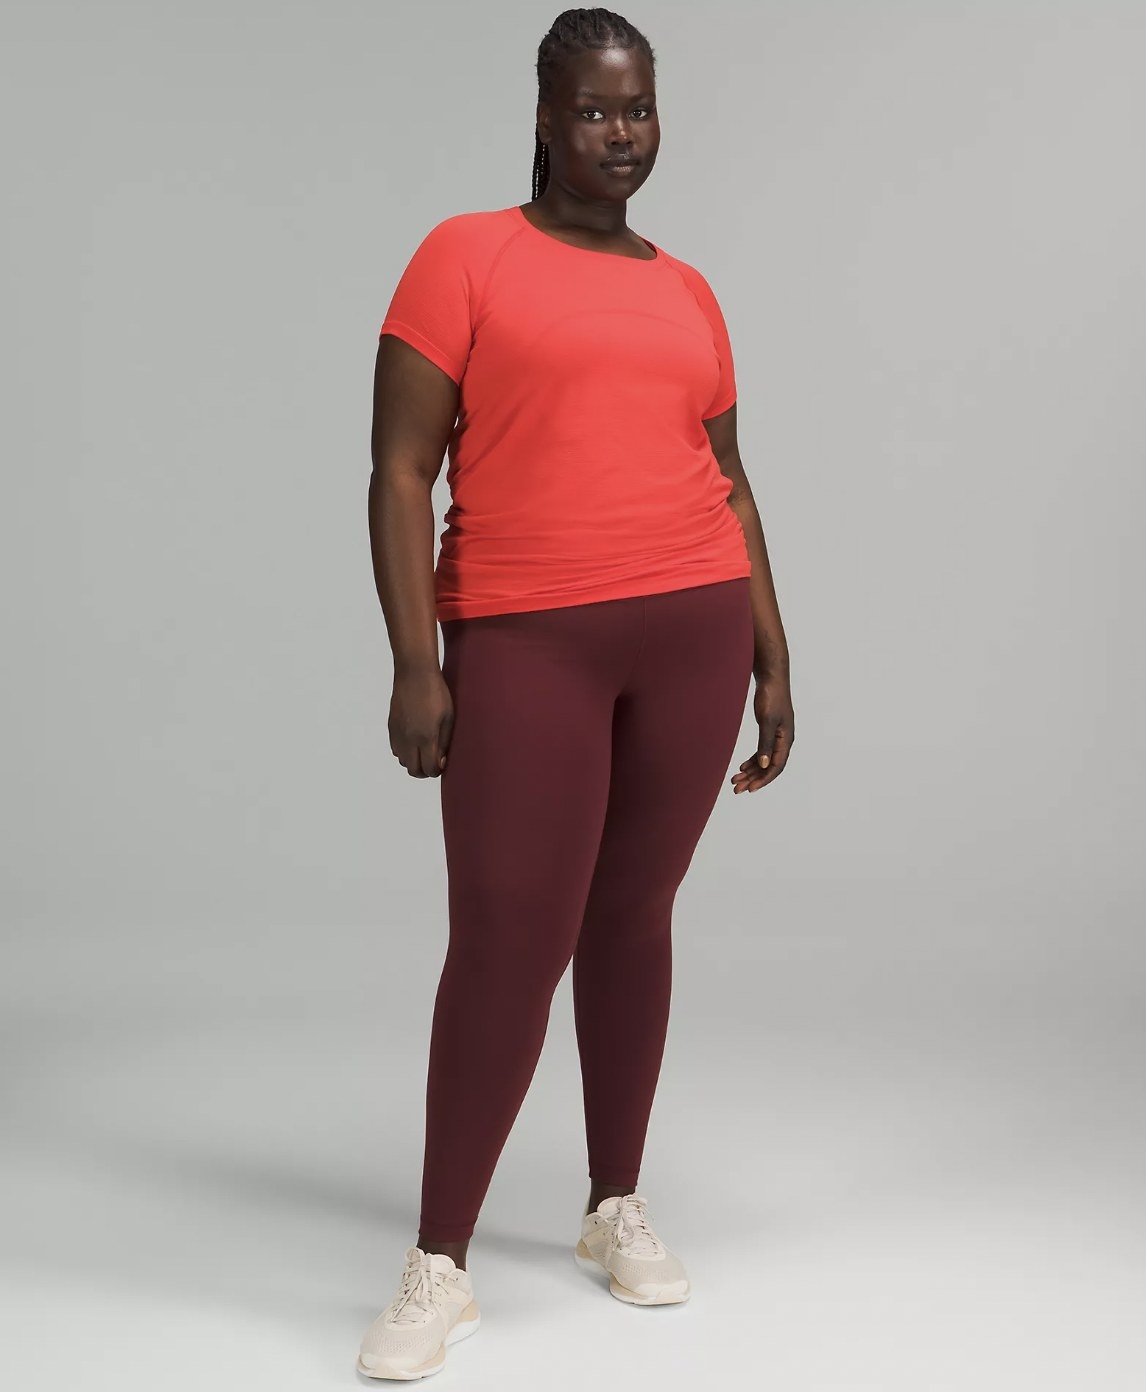 Model in the peach short sleeve with maroon leggings